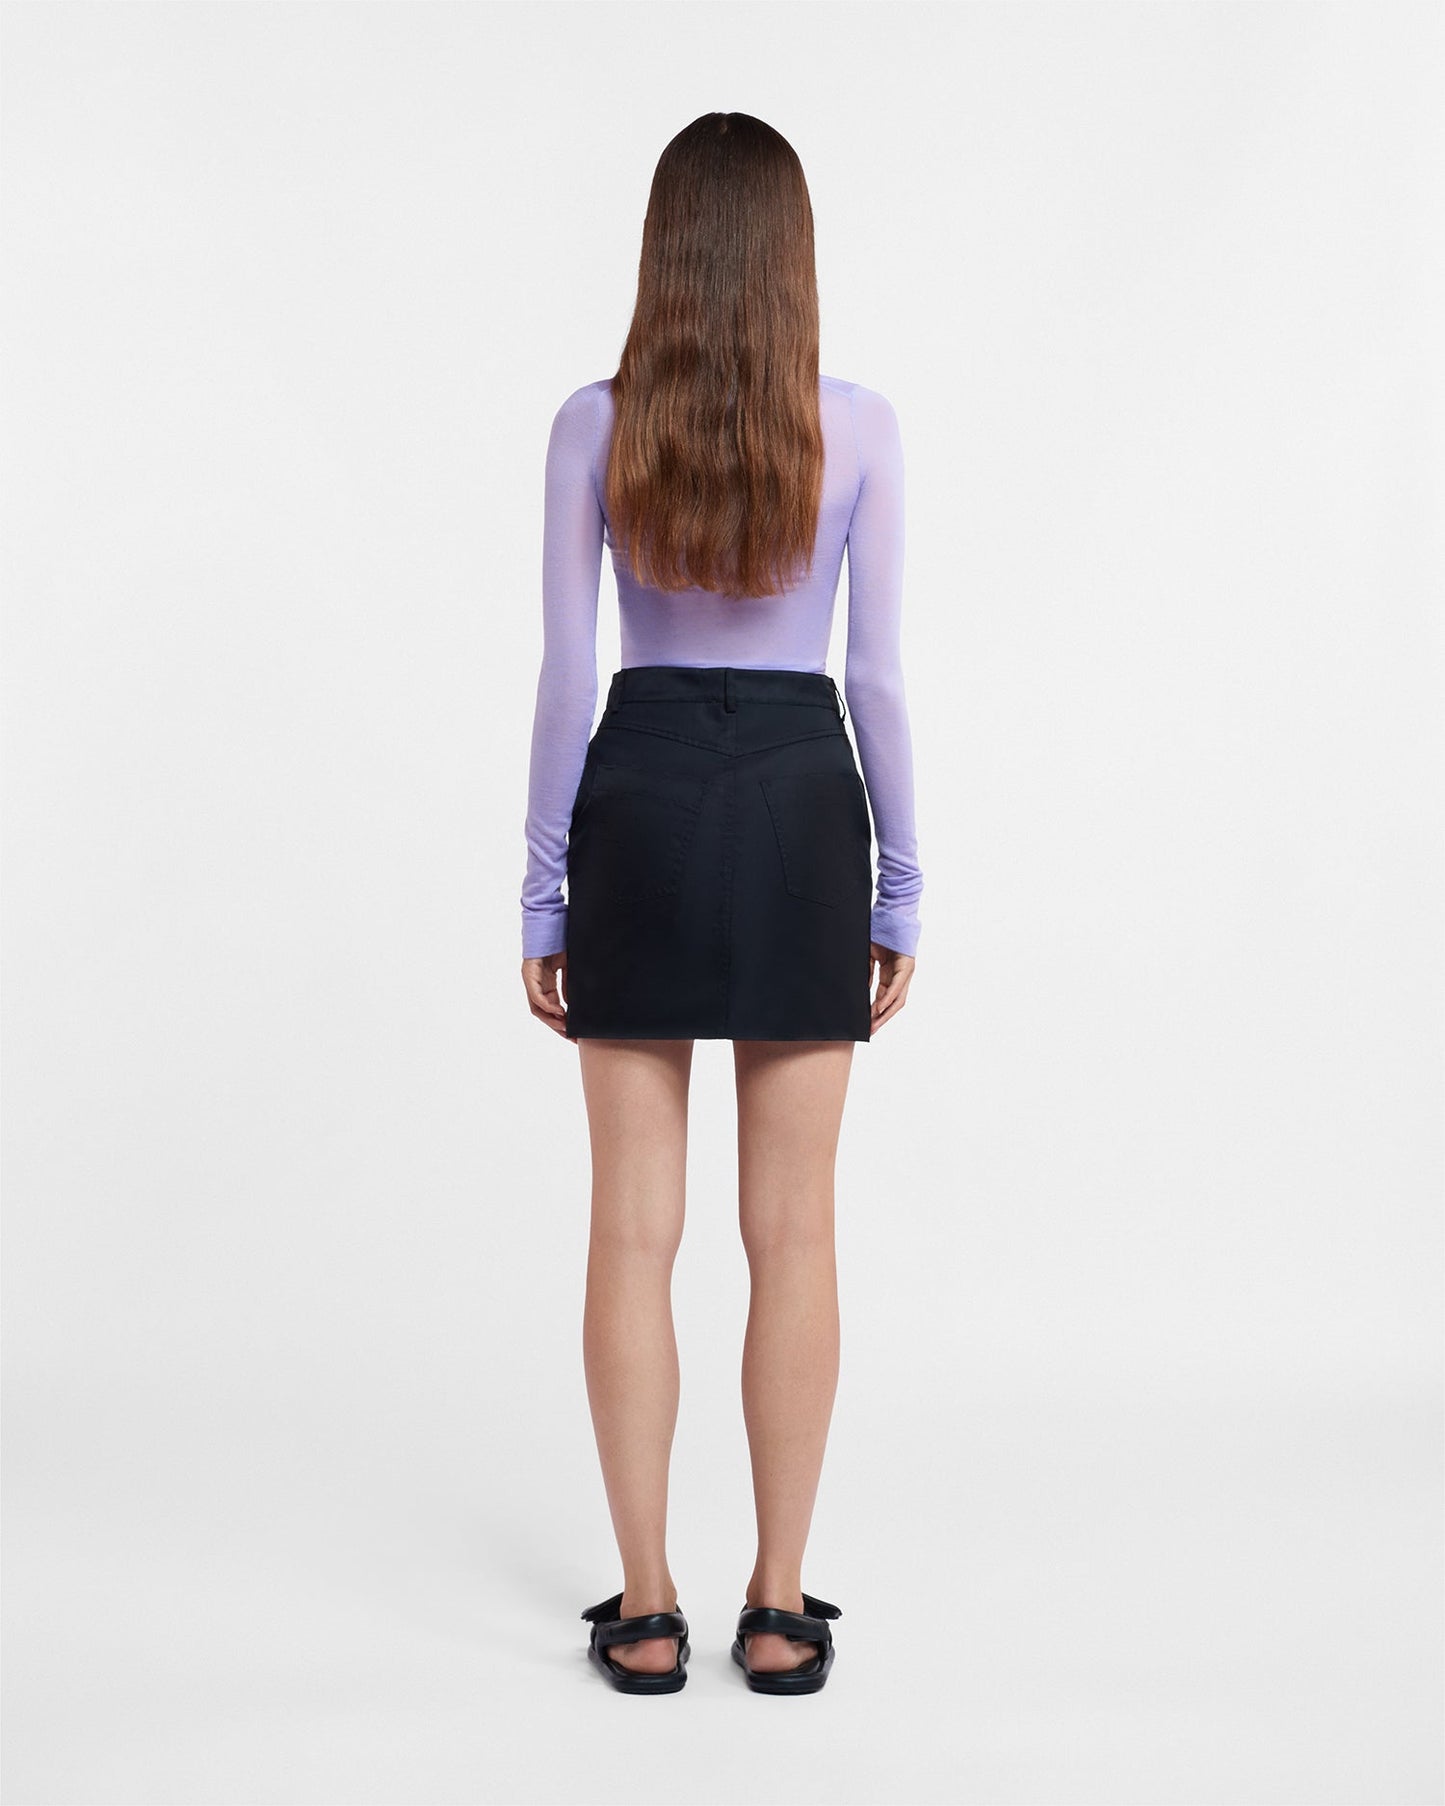 Amya - Merino Wool Top - Lilac Pf23